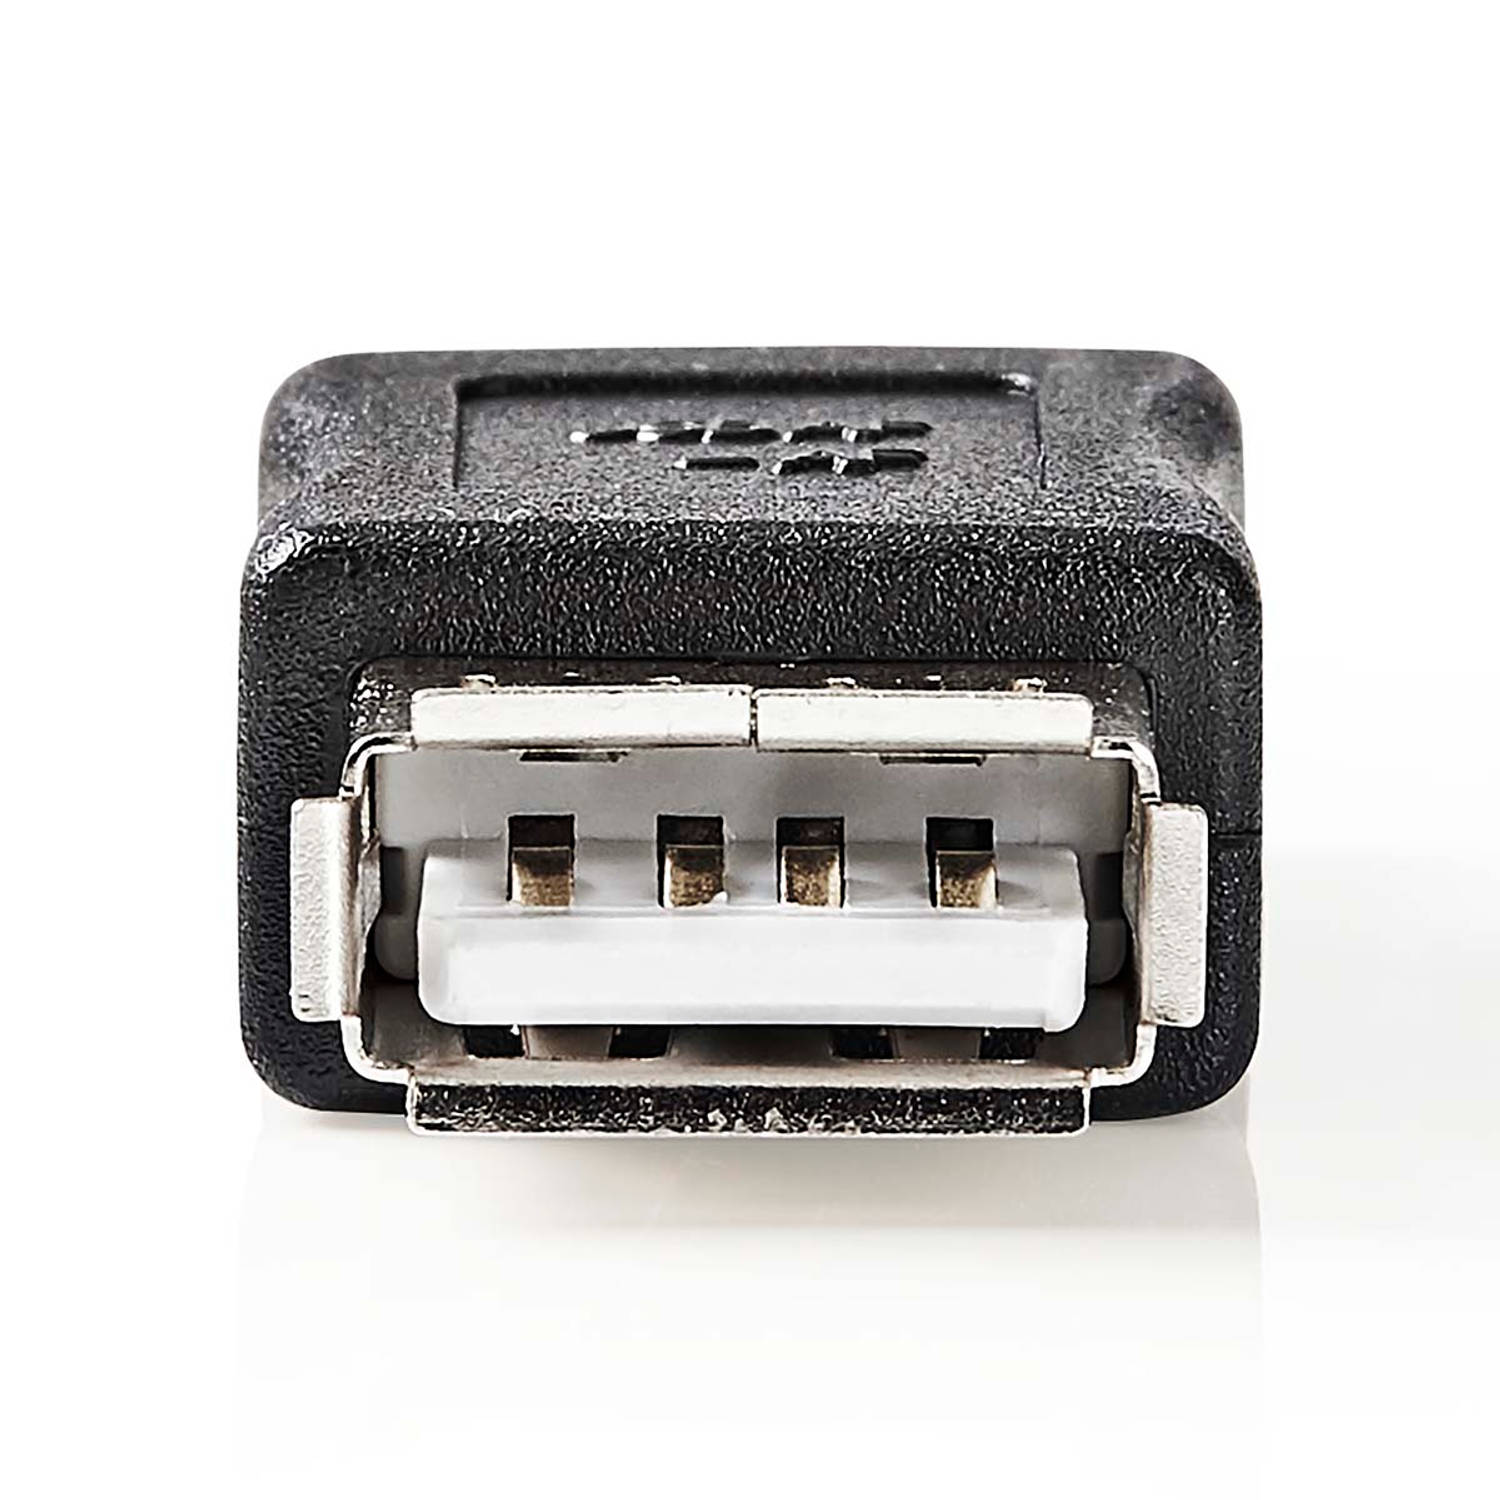 Nedis USB-A Adapter - CCGB60900BK - Zwart